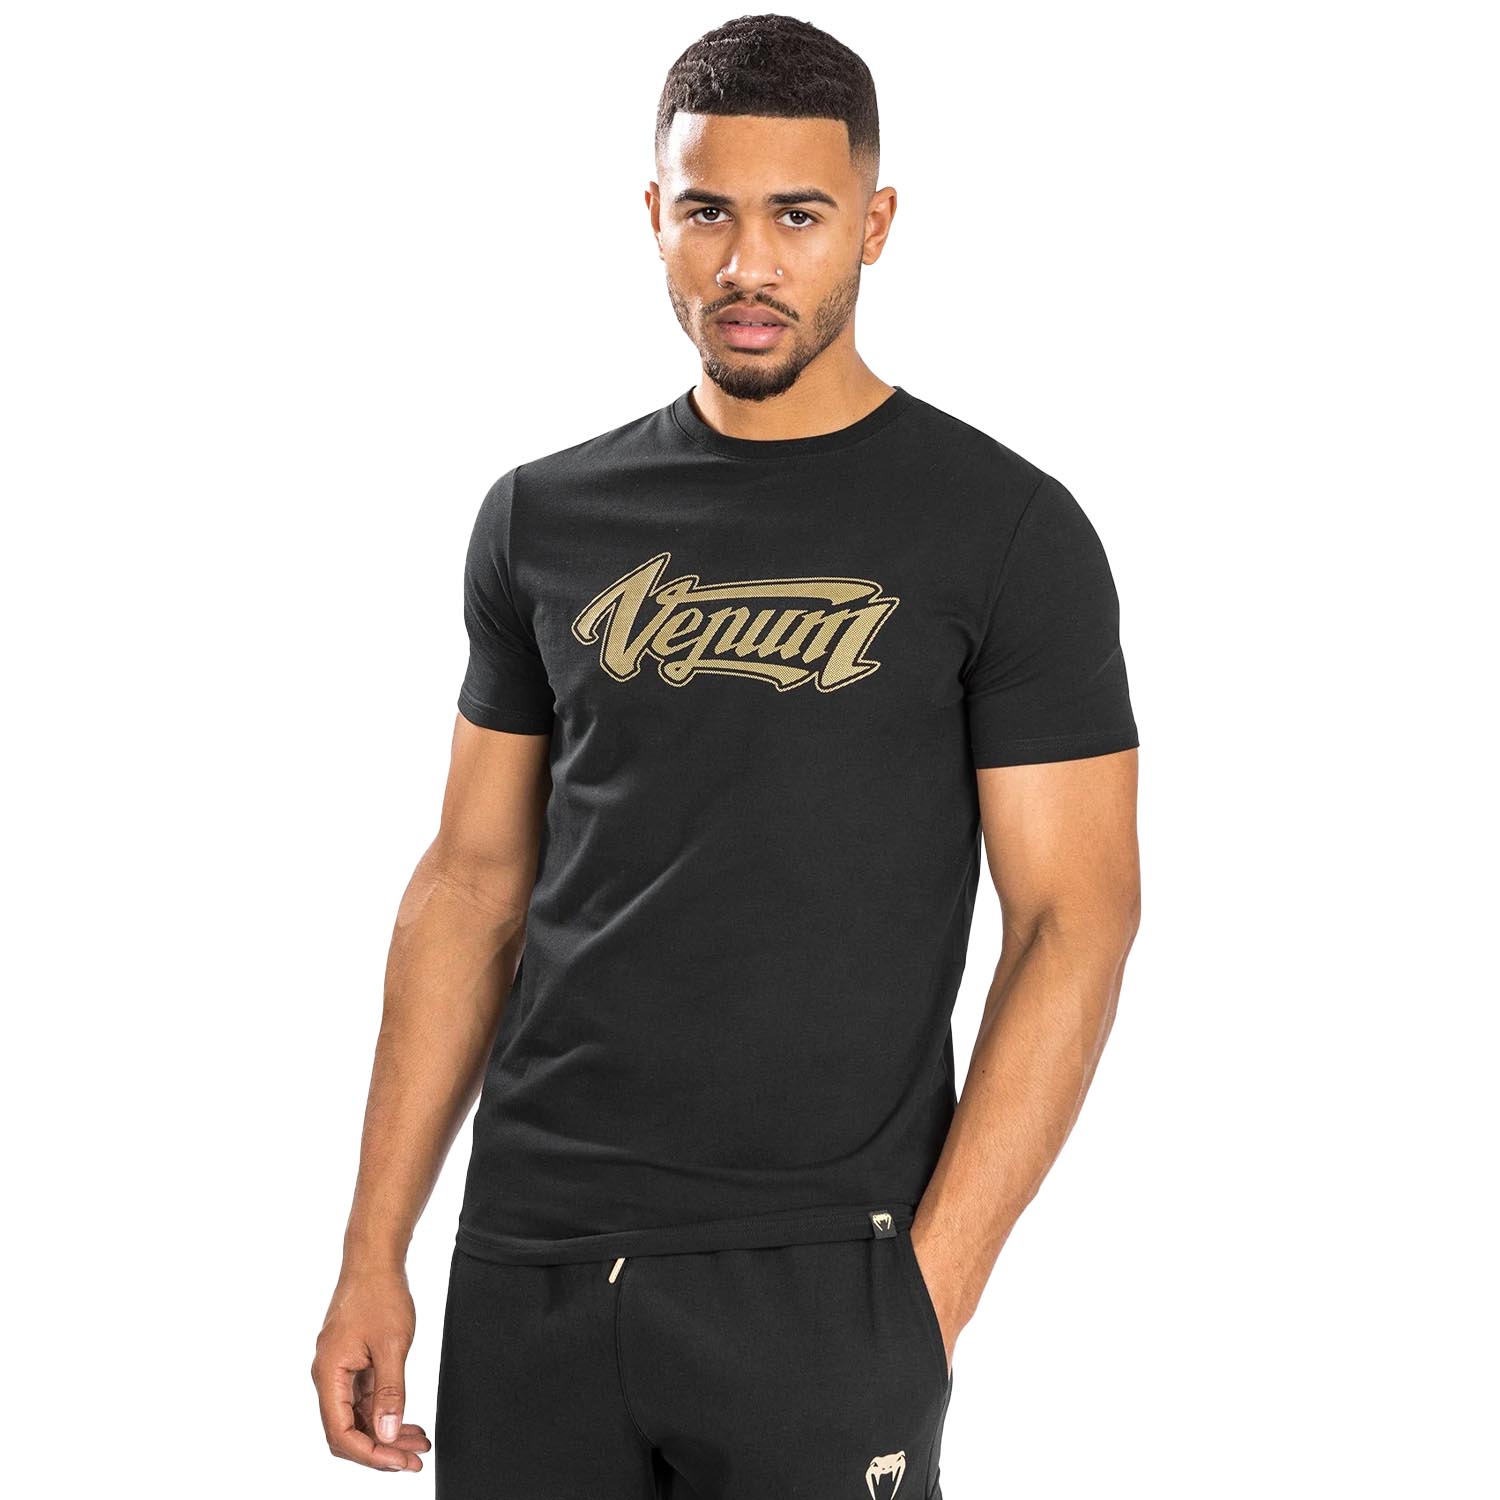 VENUM T-Shirt, Absolute 2.0, black-gold, M